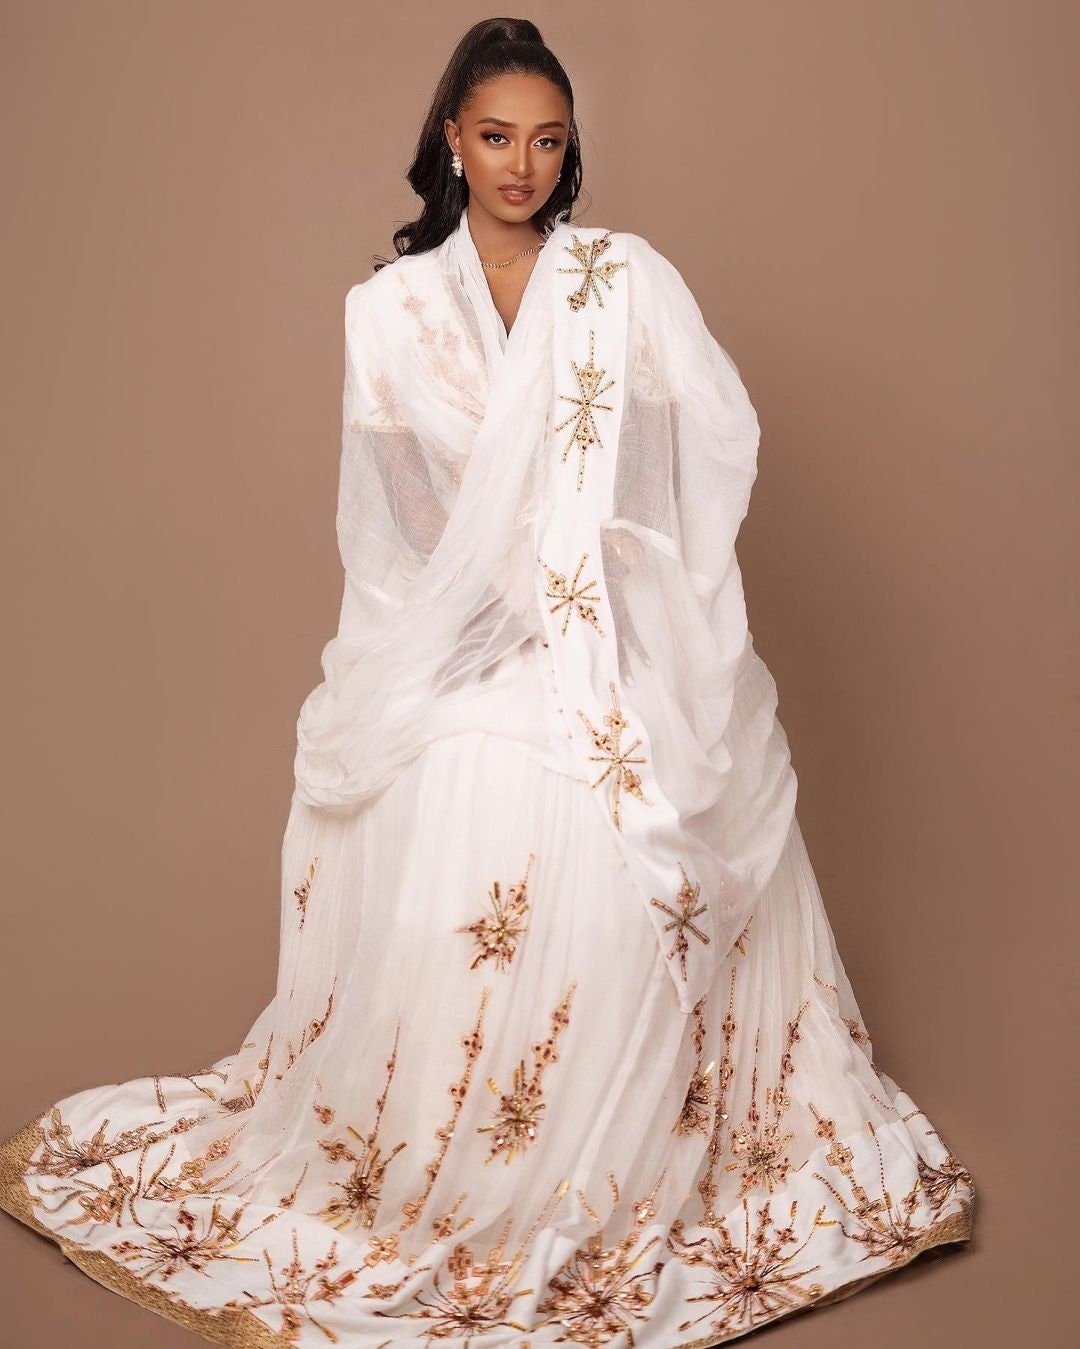 A Habesha Dress of Menen Fabric, Shimena Bottom, and White and Golden Tilf Design with Beadwork, Habesha Kemis, Eritrean dress, ሀበሻ